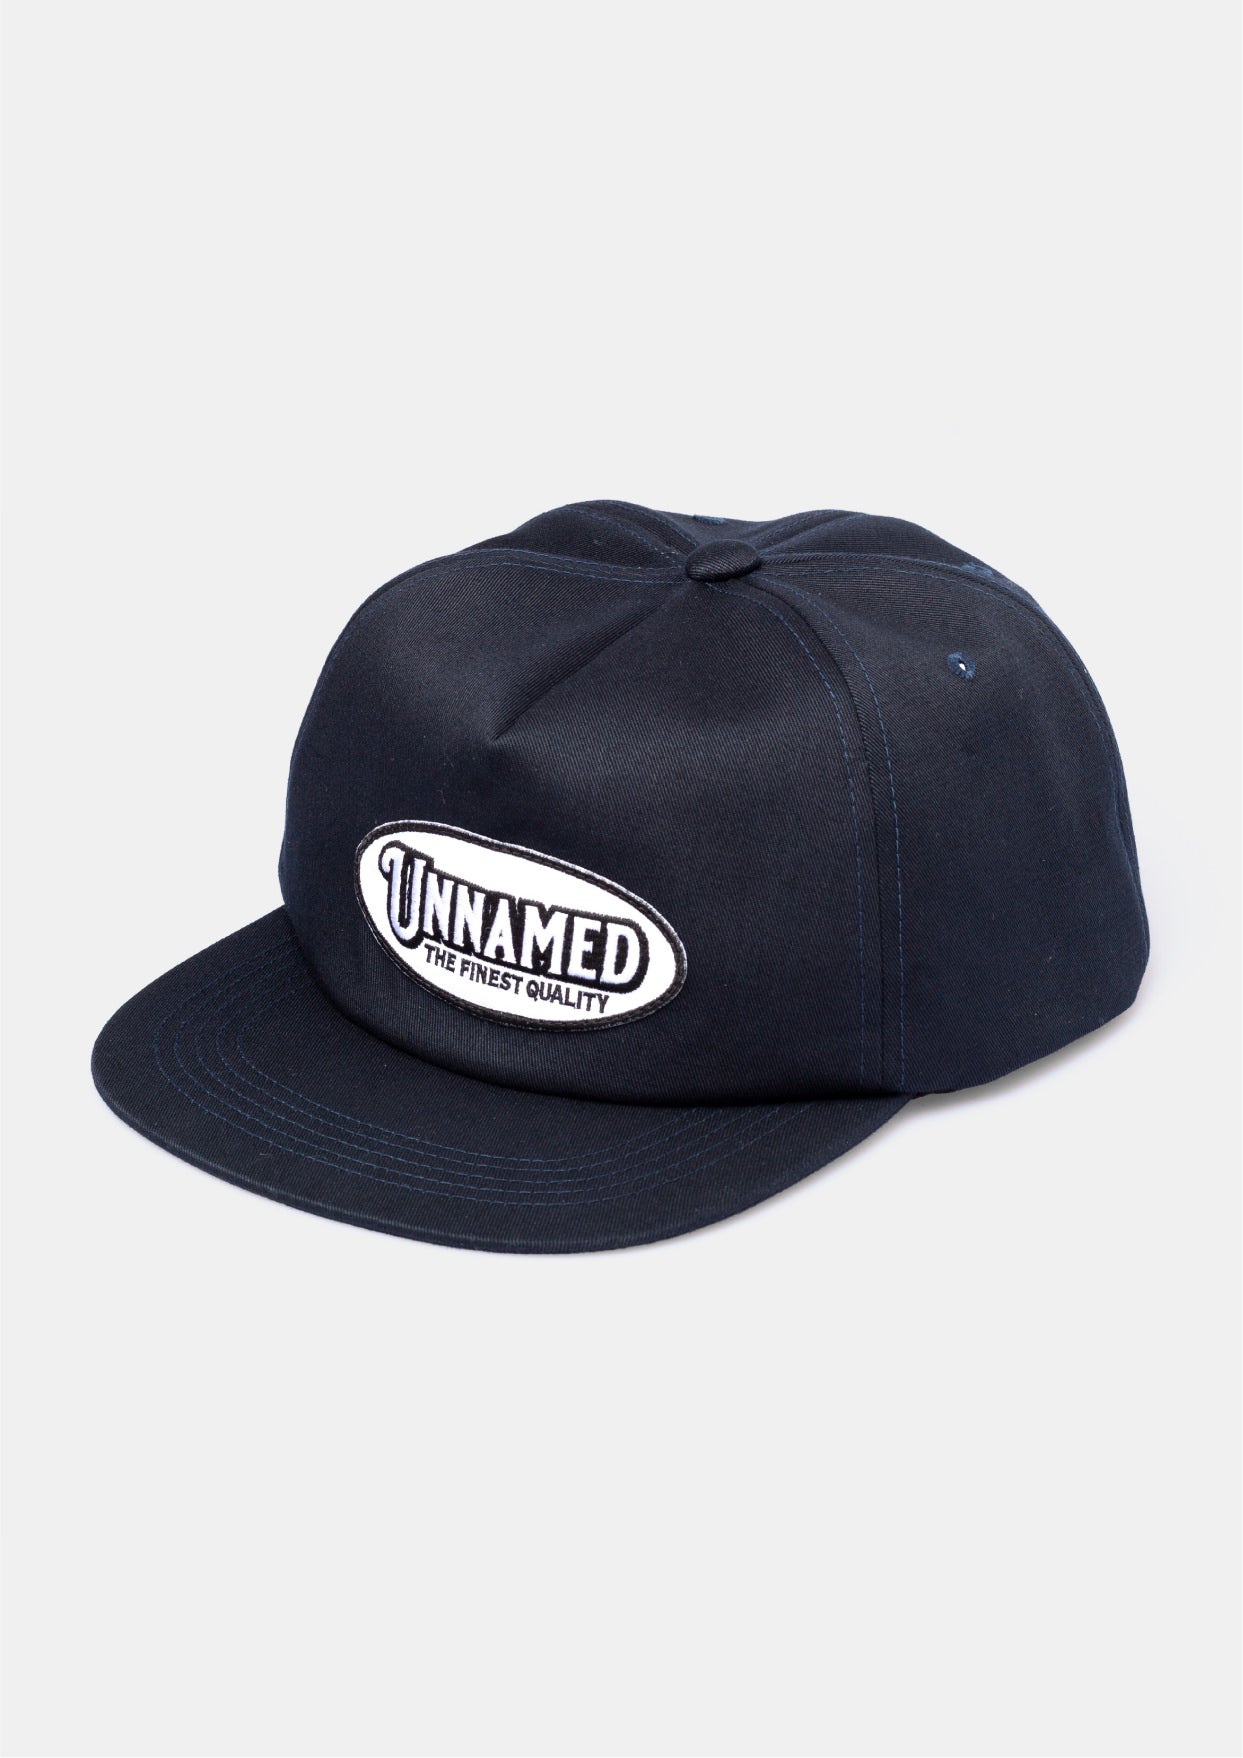 unnamed headwear deep cap black 黒 - キャップ